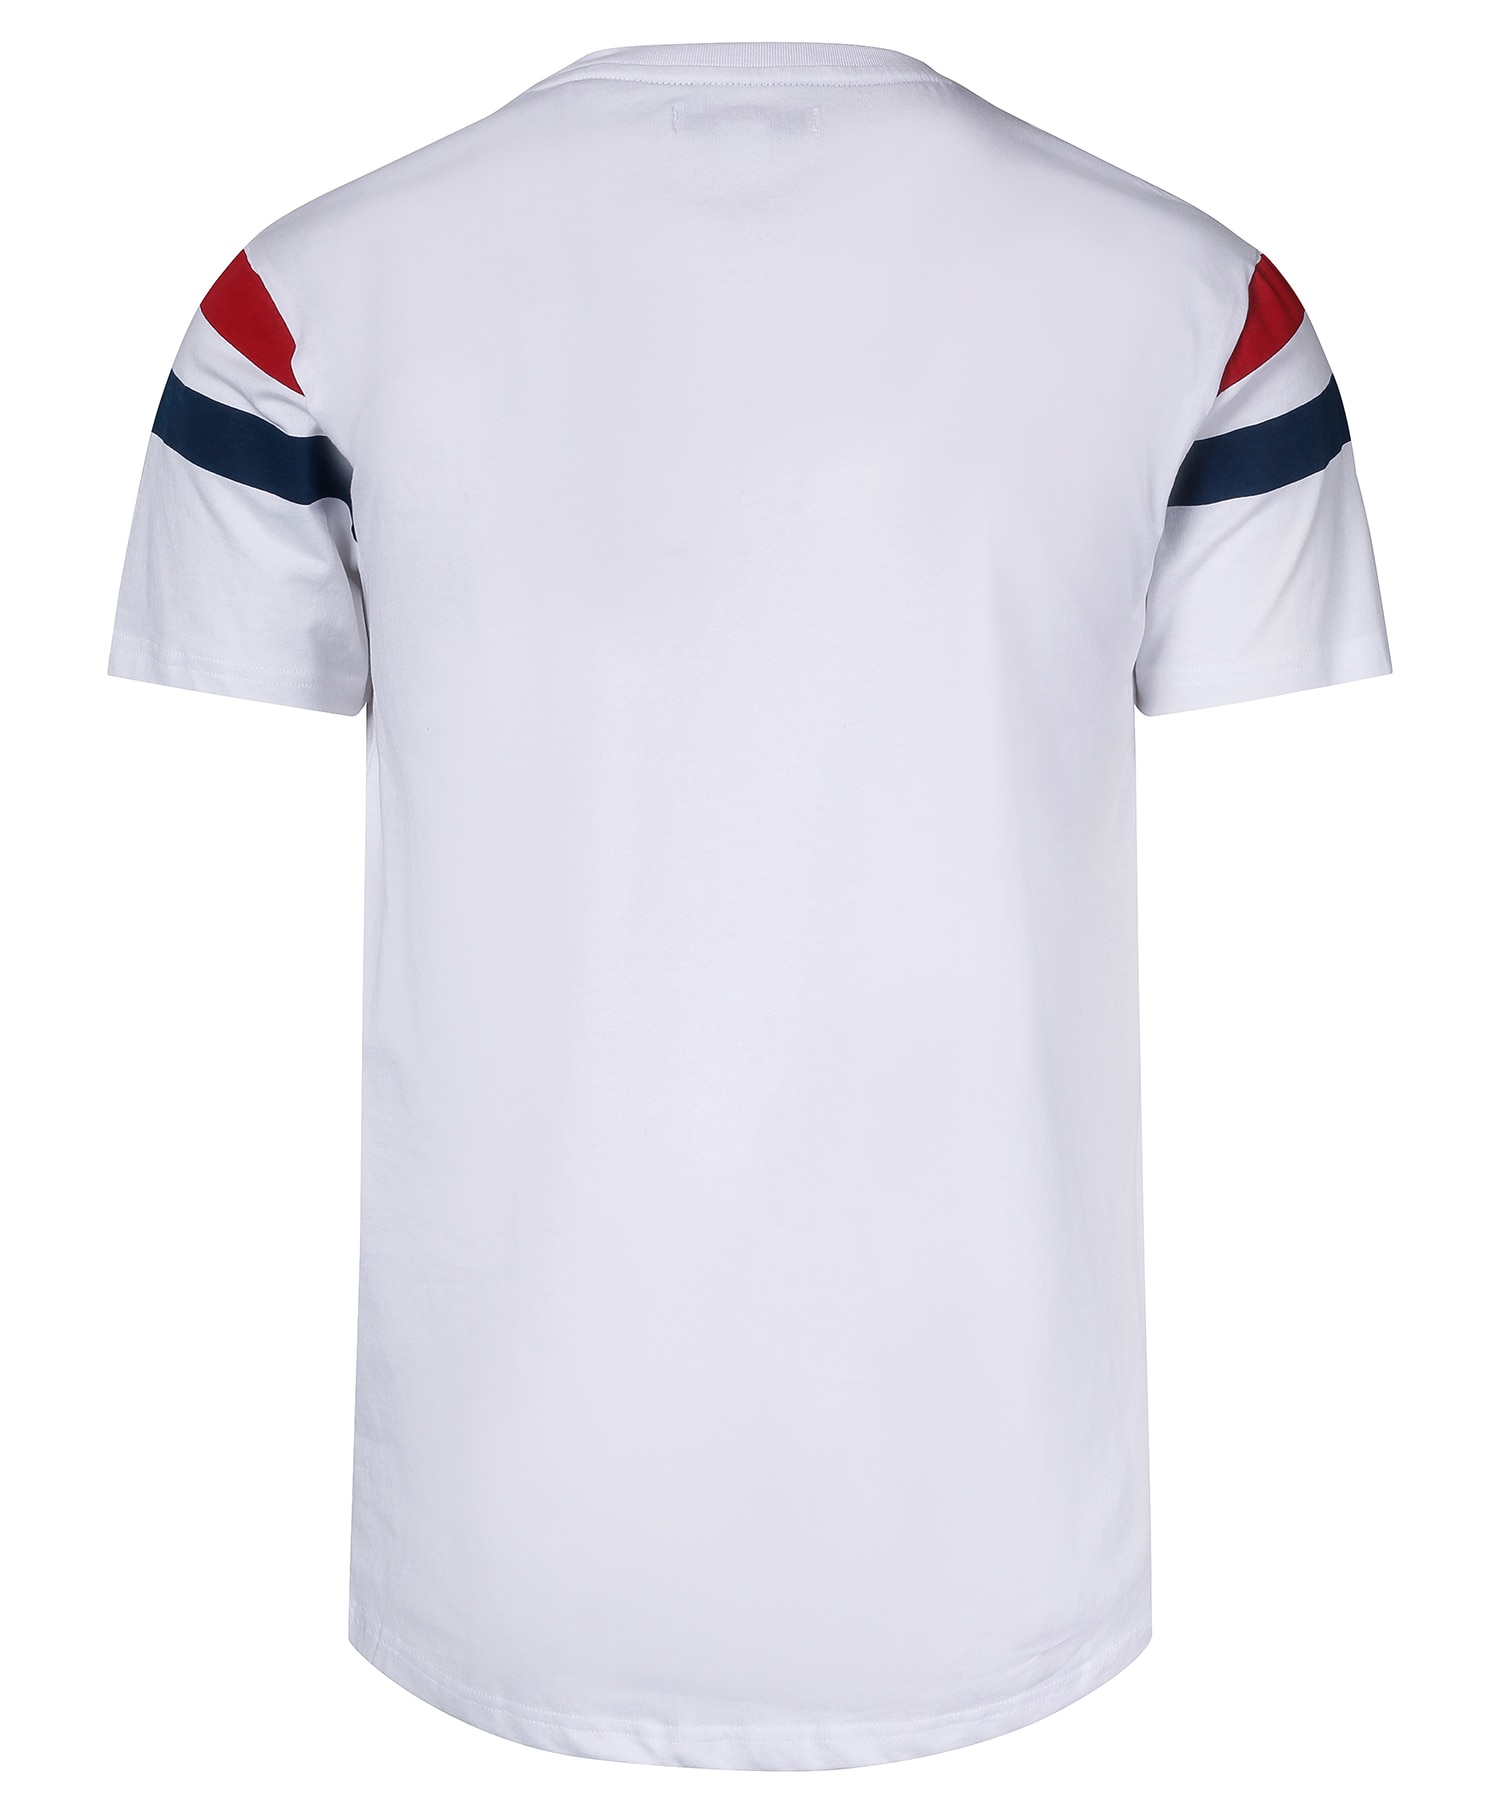 U.S Polo Briley T-shirt